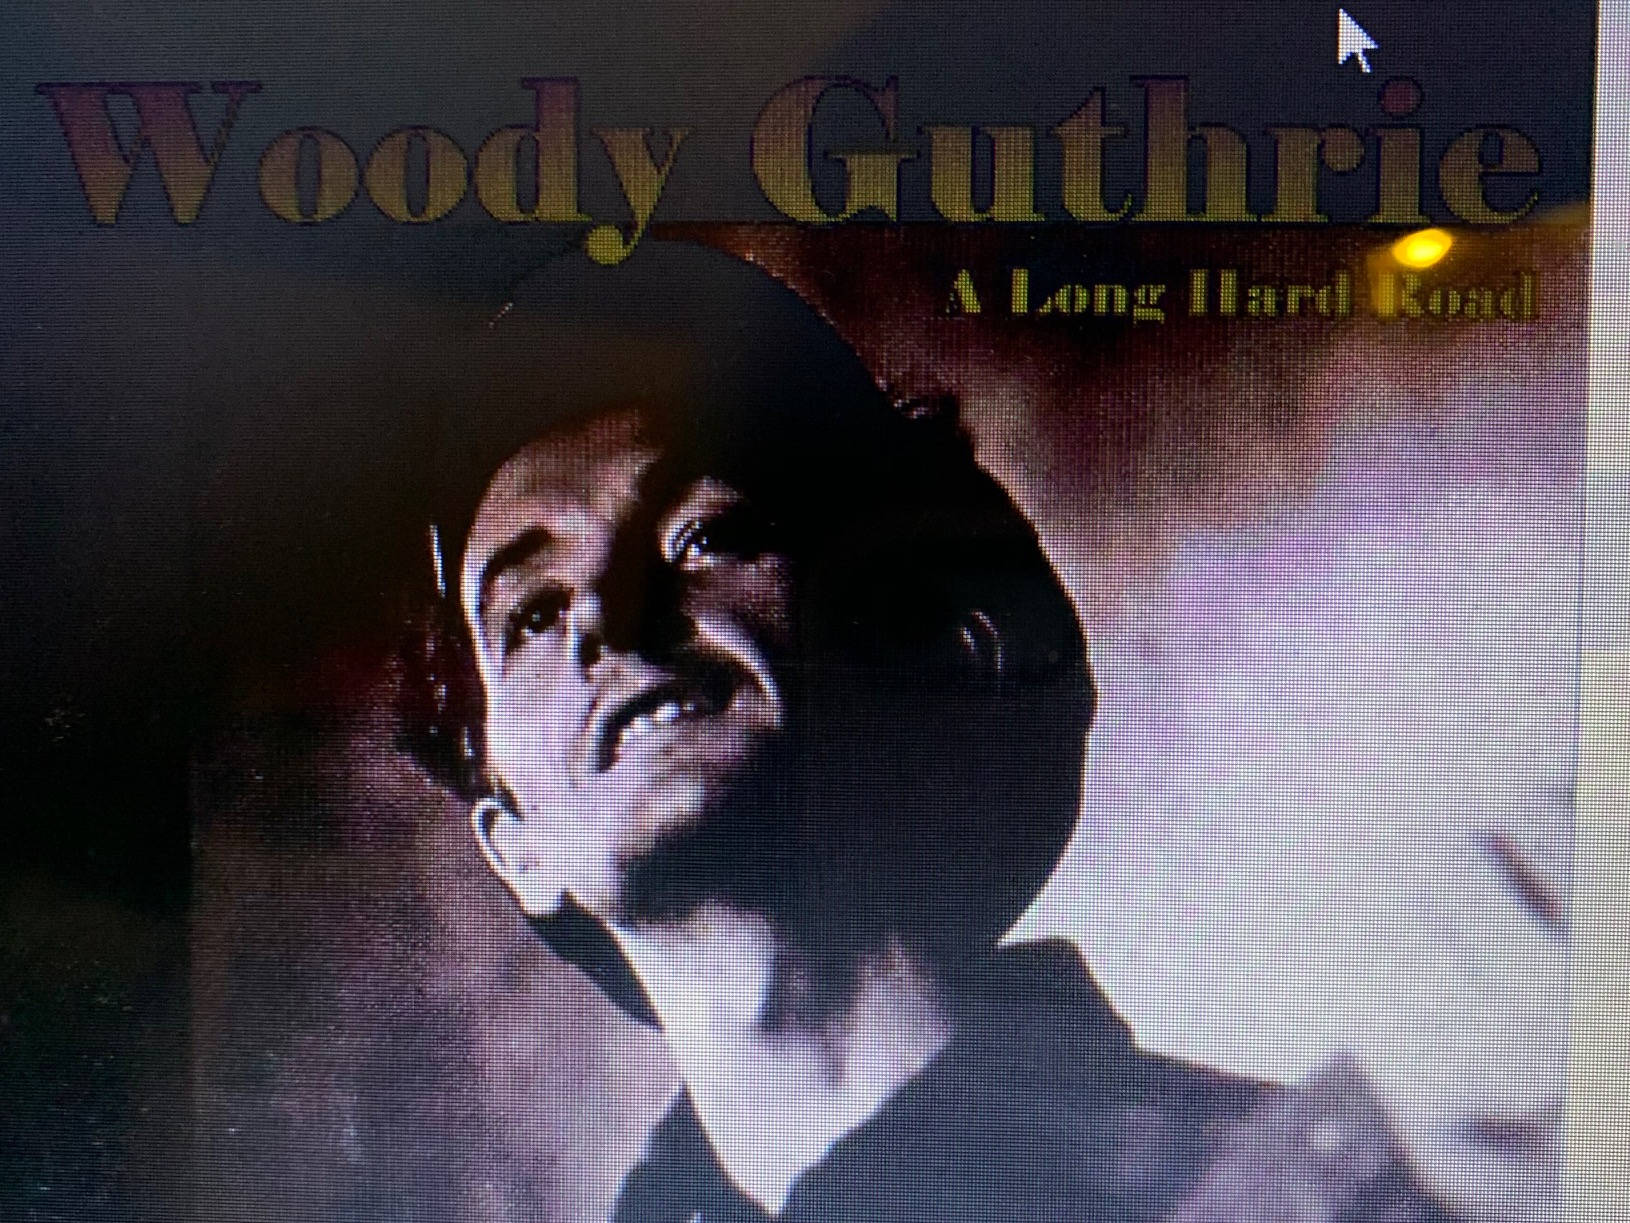 Woody Guthrie 1630 X 1223 Wallpaper